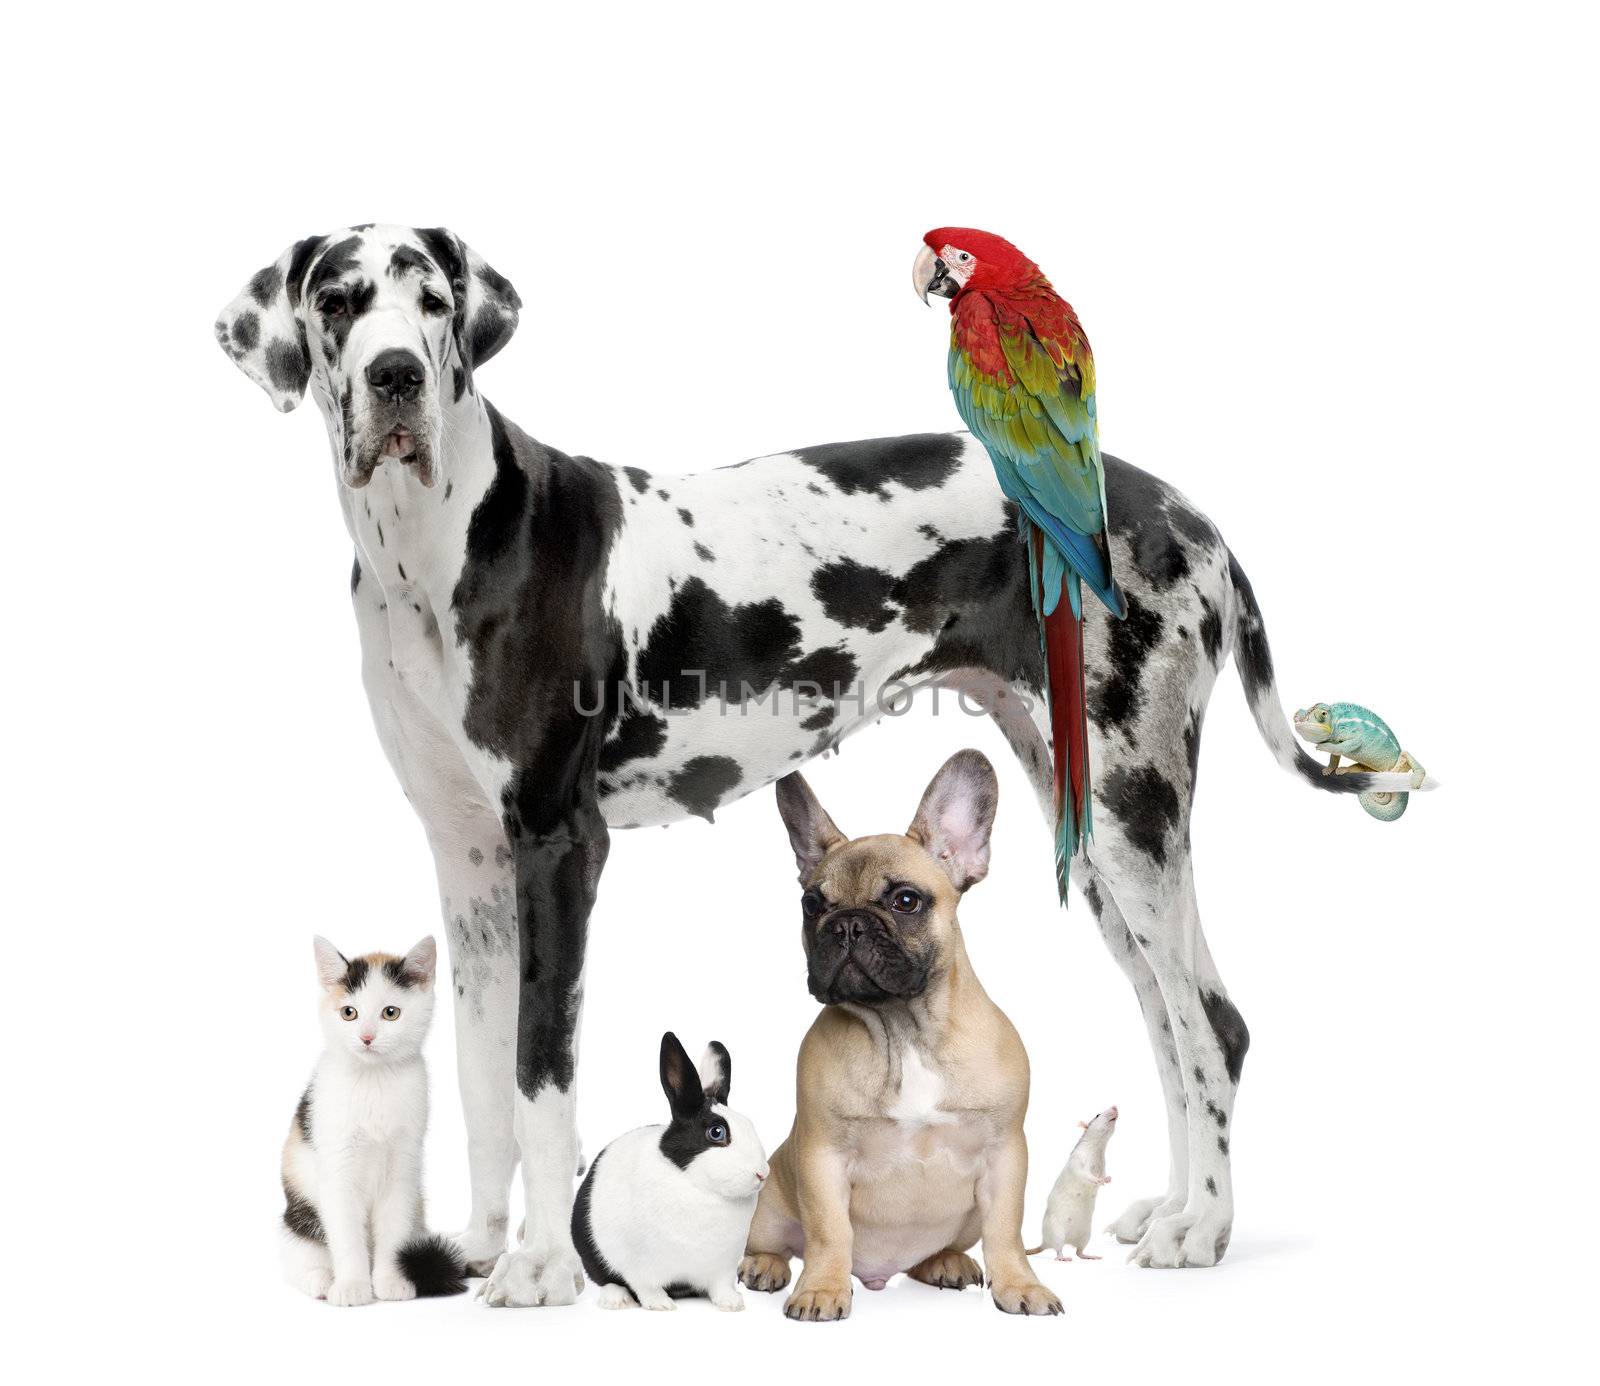 Group of pets - Dog,cat, bird, reptile, rabbit by wsxcvfr04